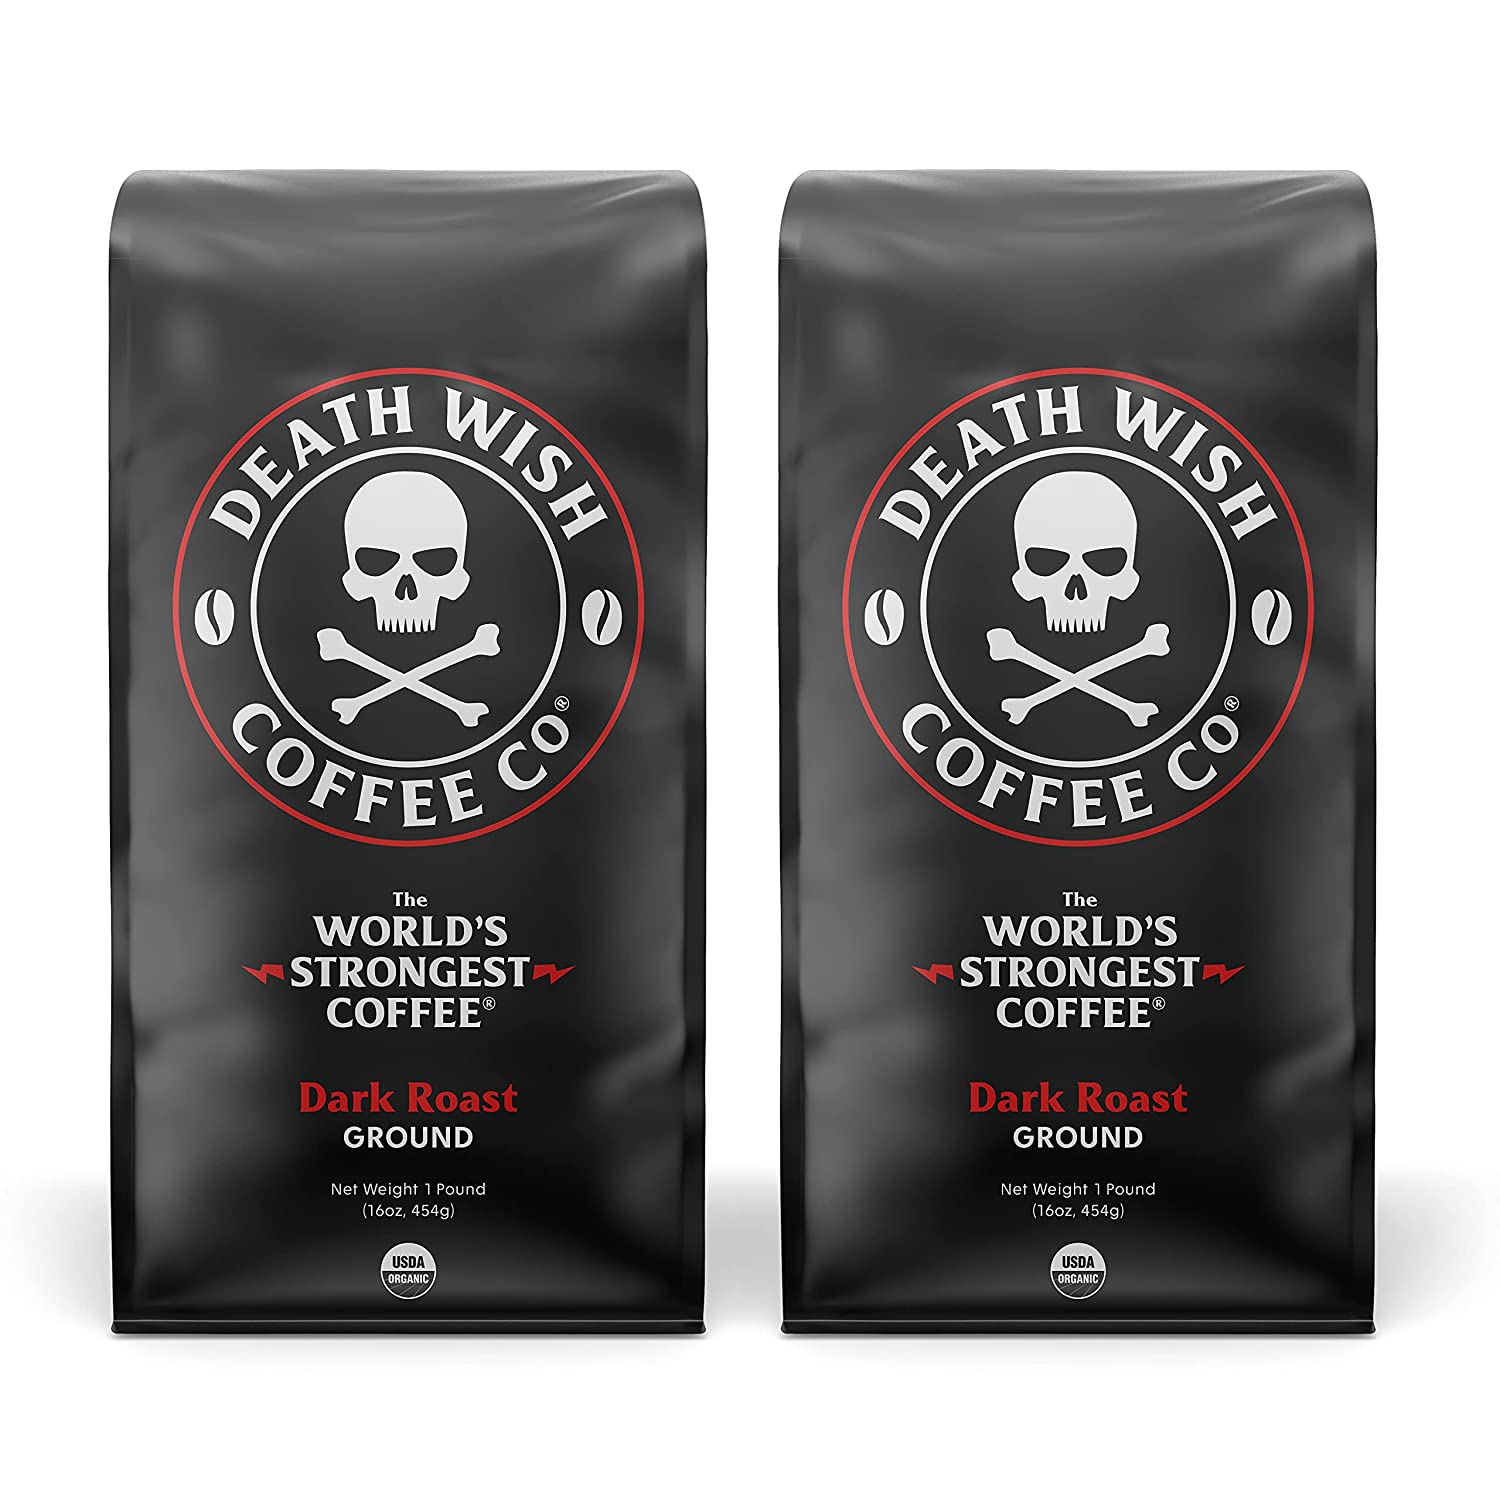 Death Wish Coffee Co. Highly Caffeinated Fair Trade Organic Coffee